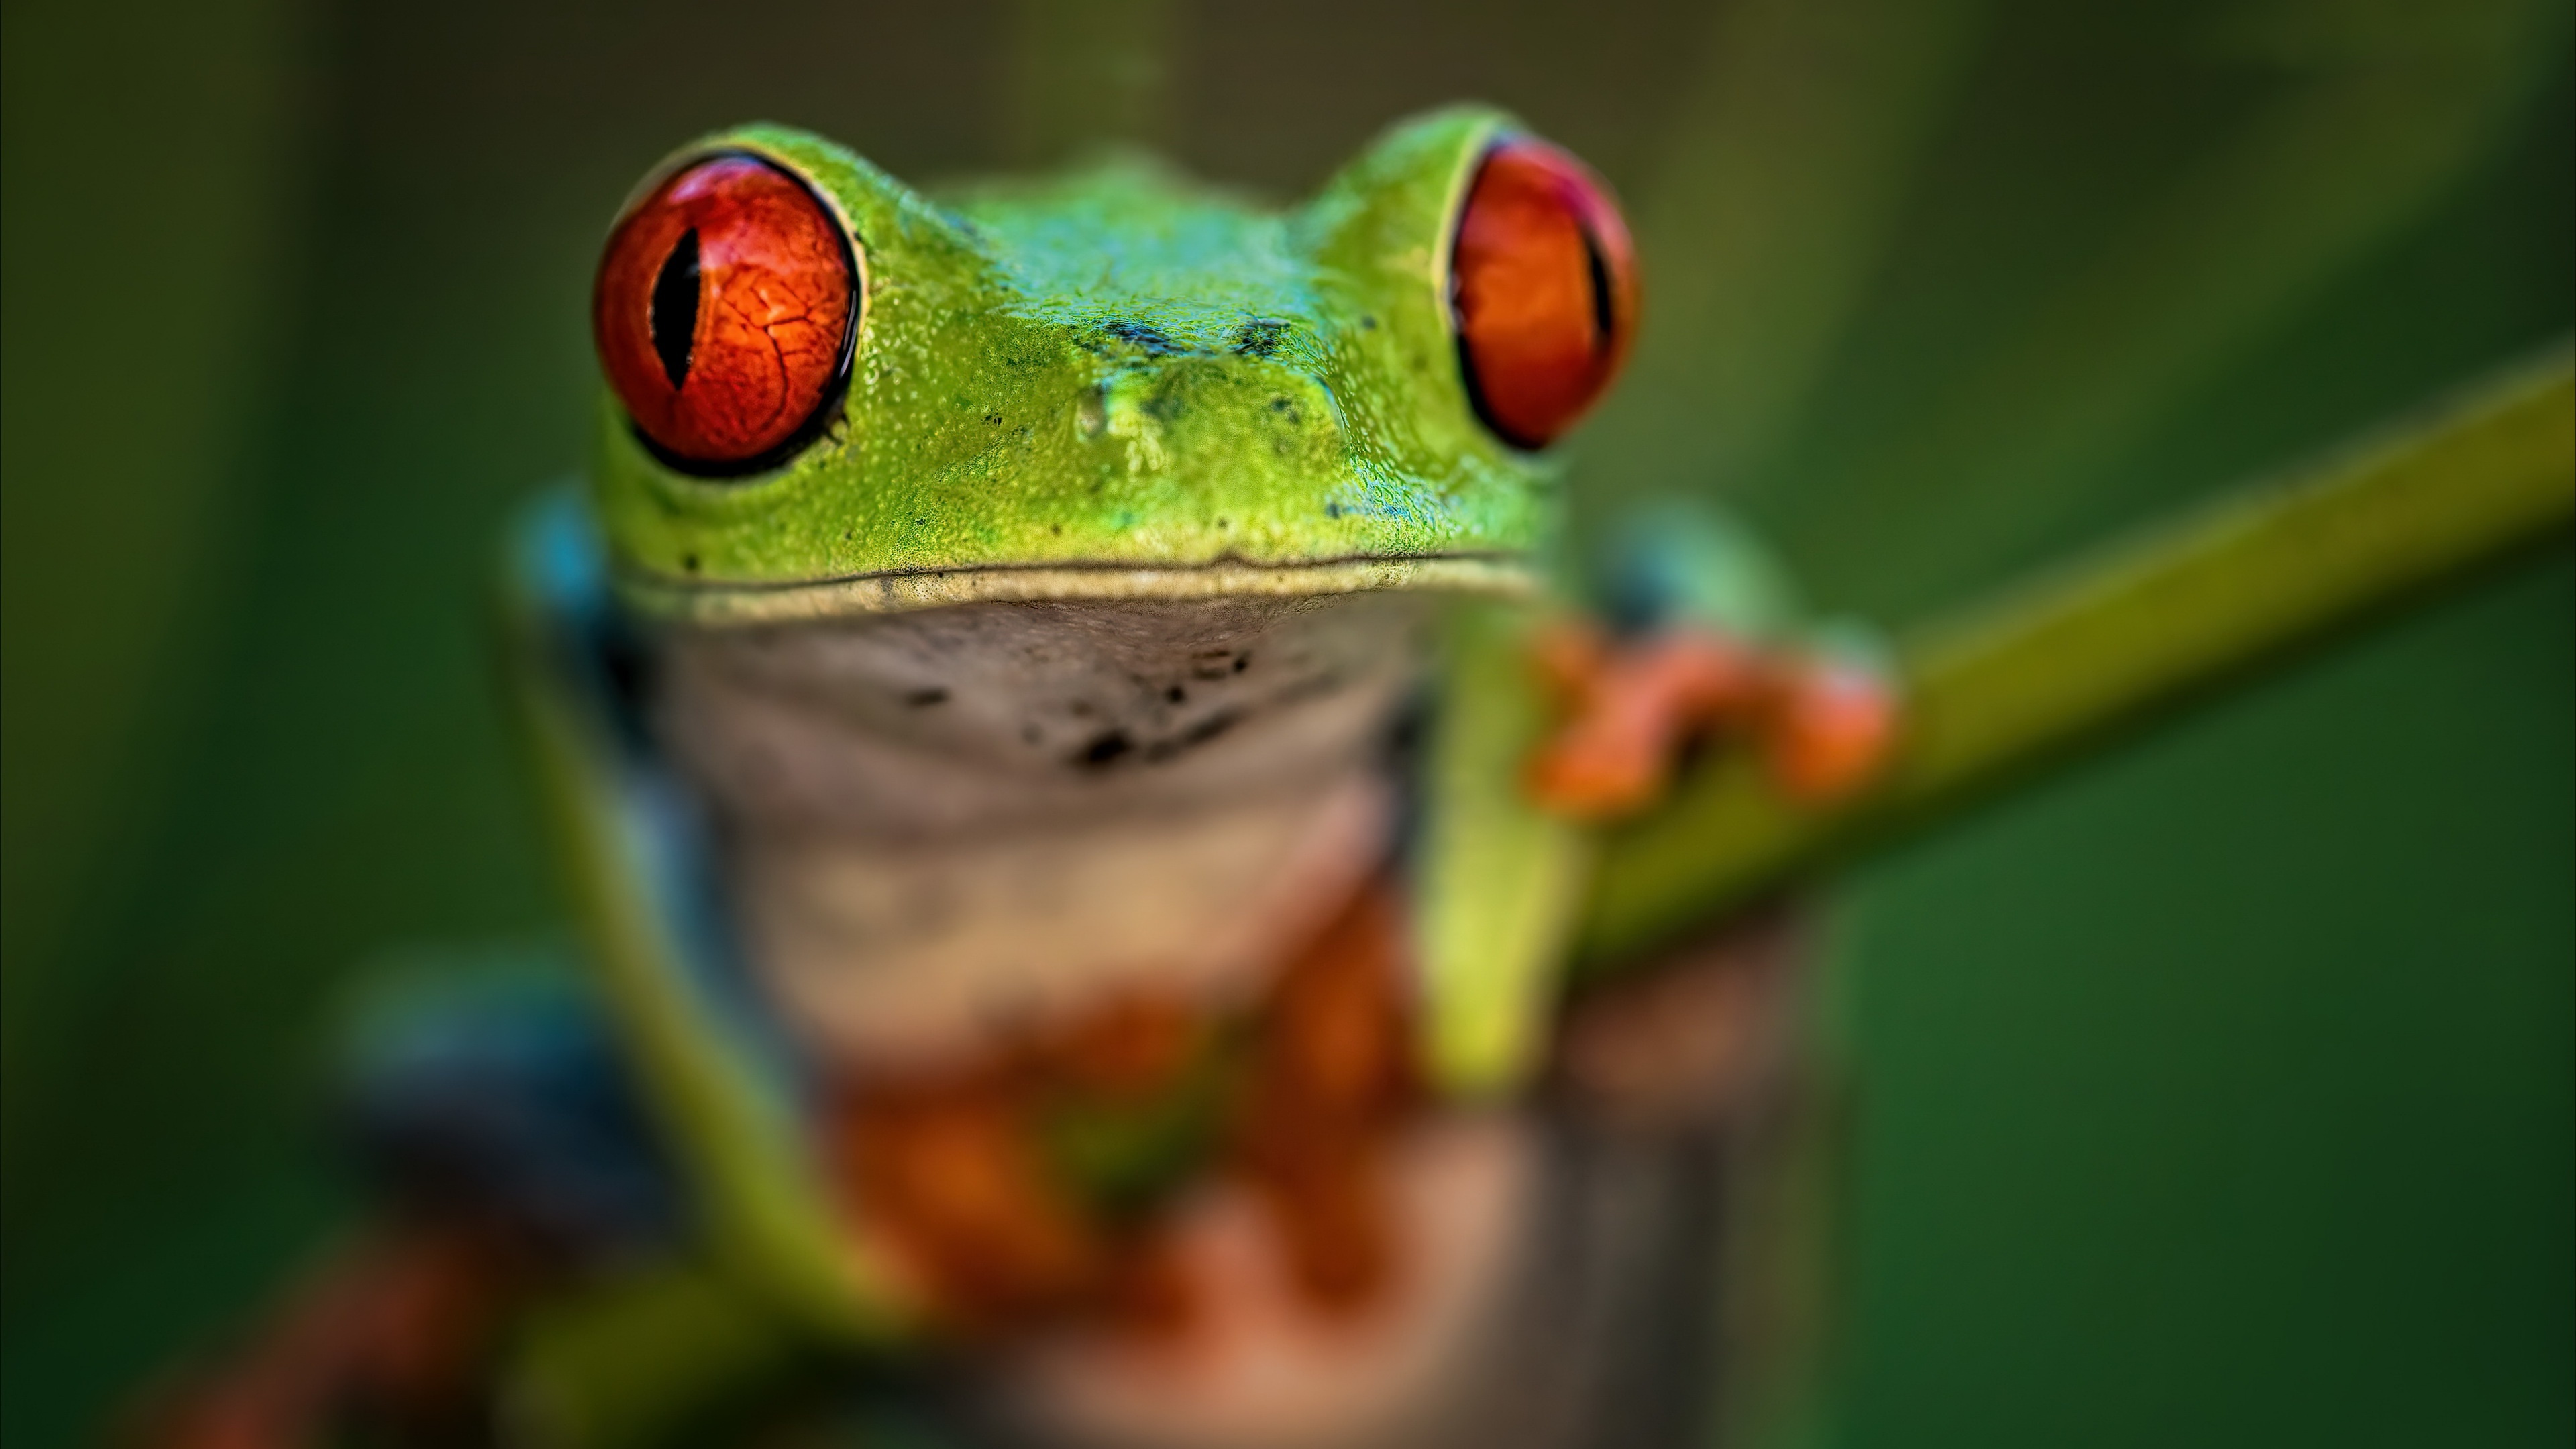 Frog 4K ultra wallpaper, Stunning resolution, Immersive visuals, Ultra HD quality, 3840x2160 4K Desktop